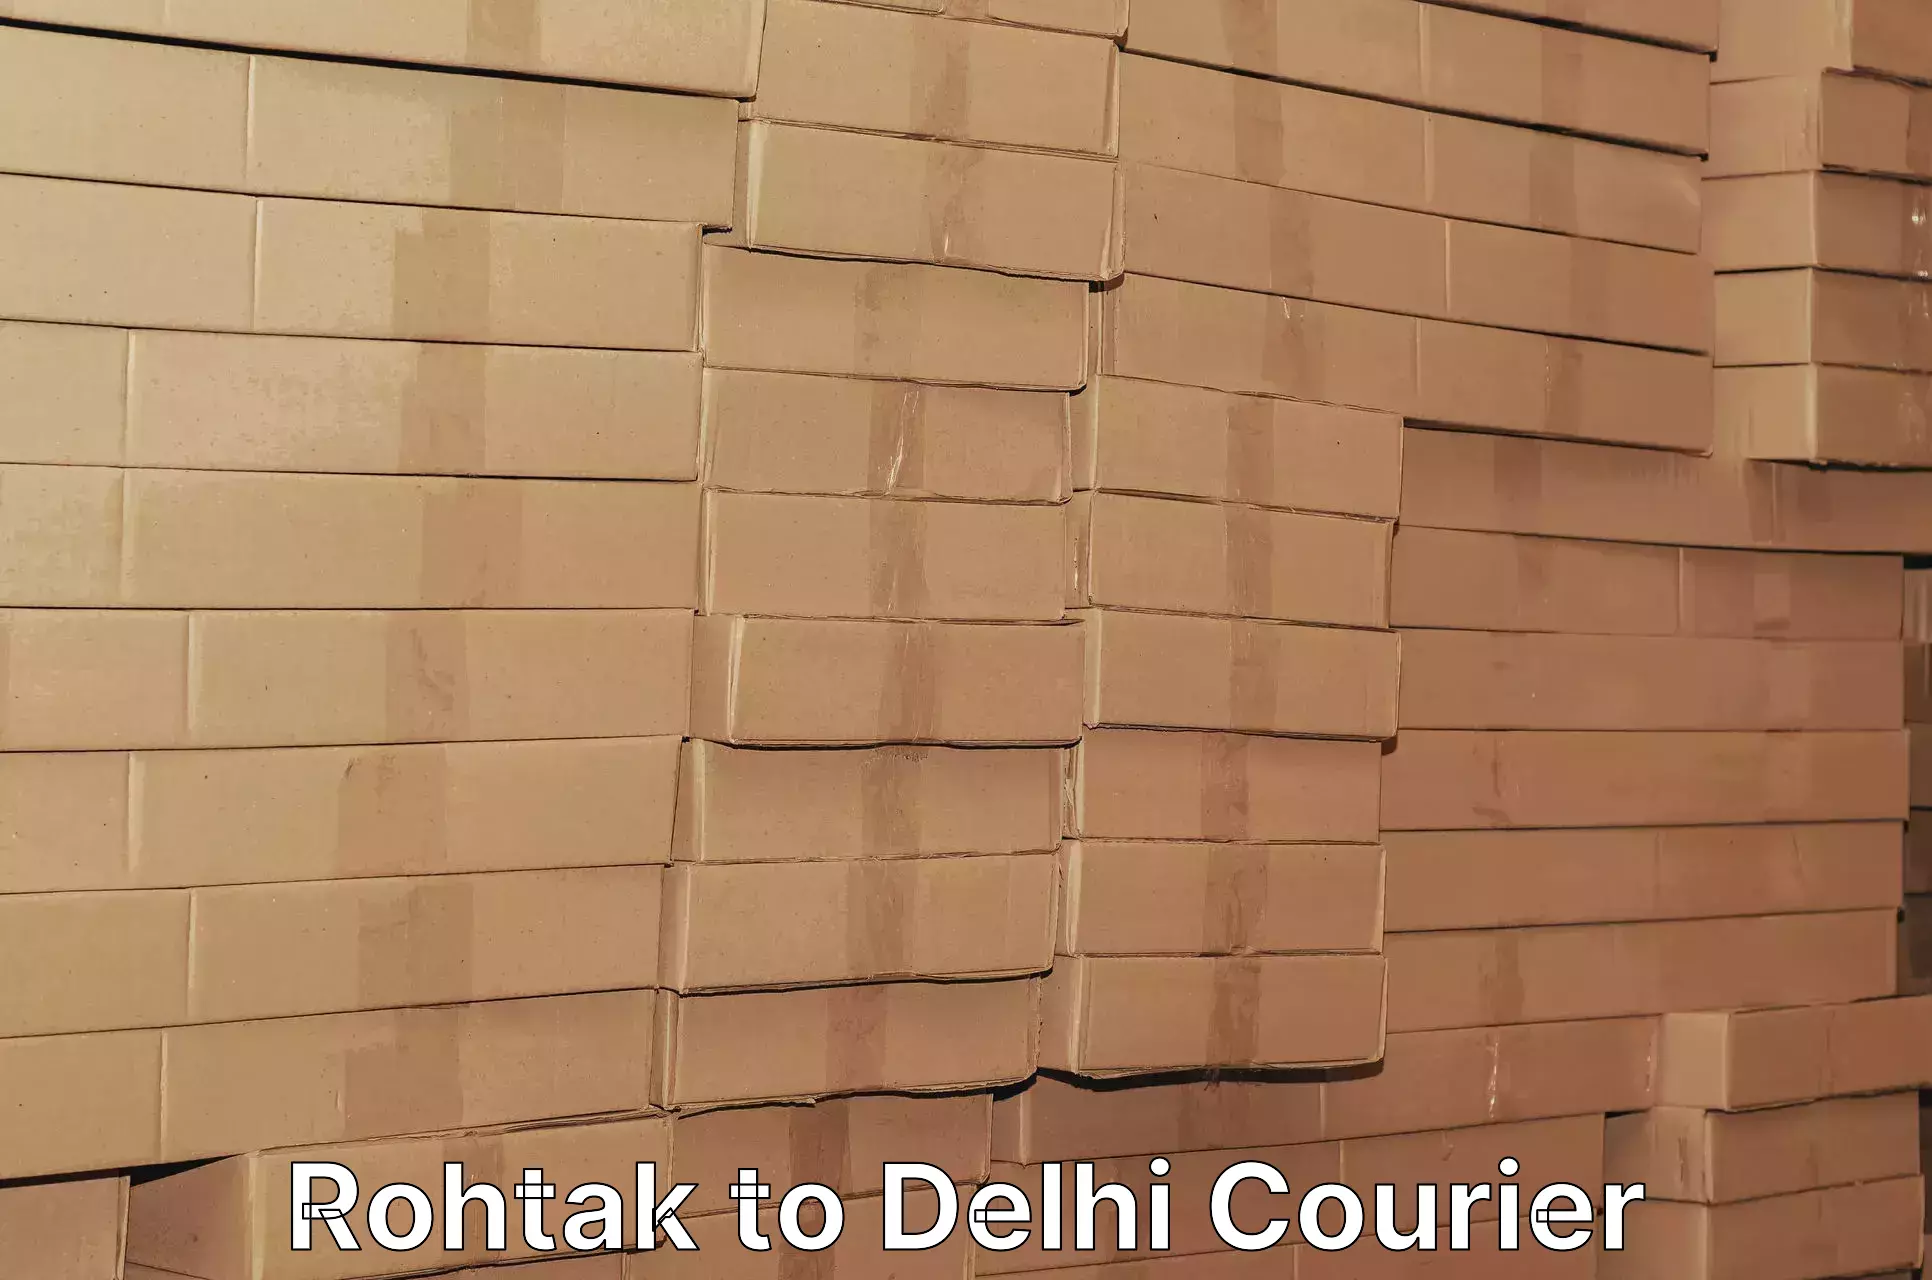 Courier rate comparison Rohtak to East Delhi